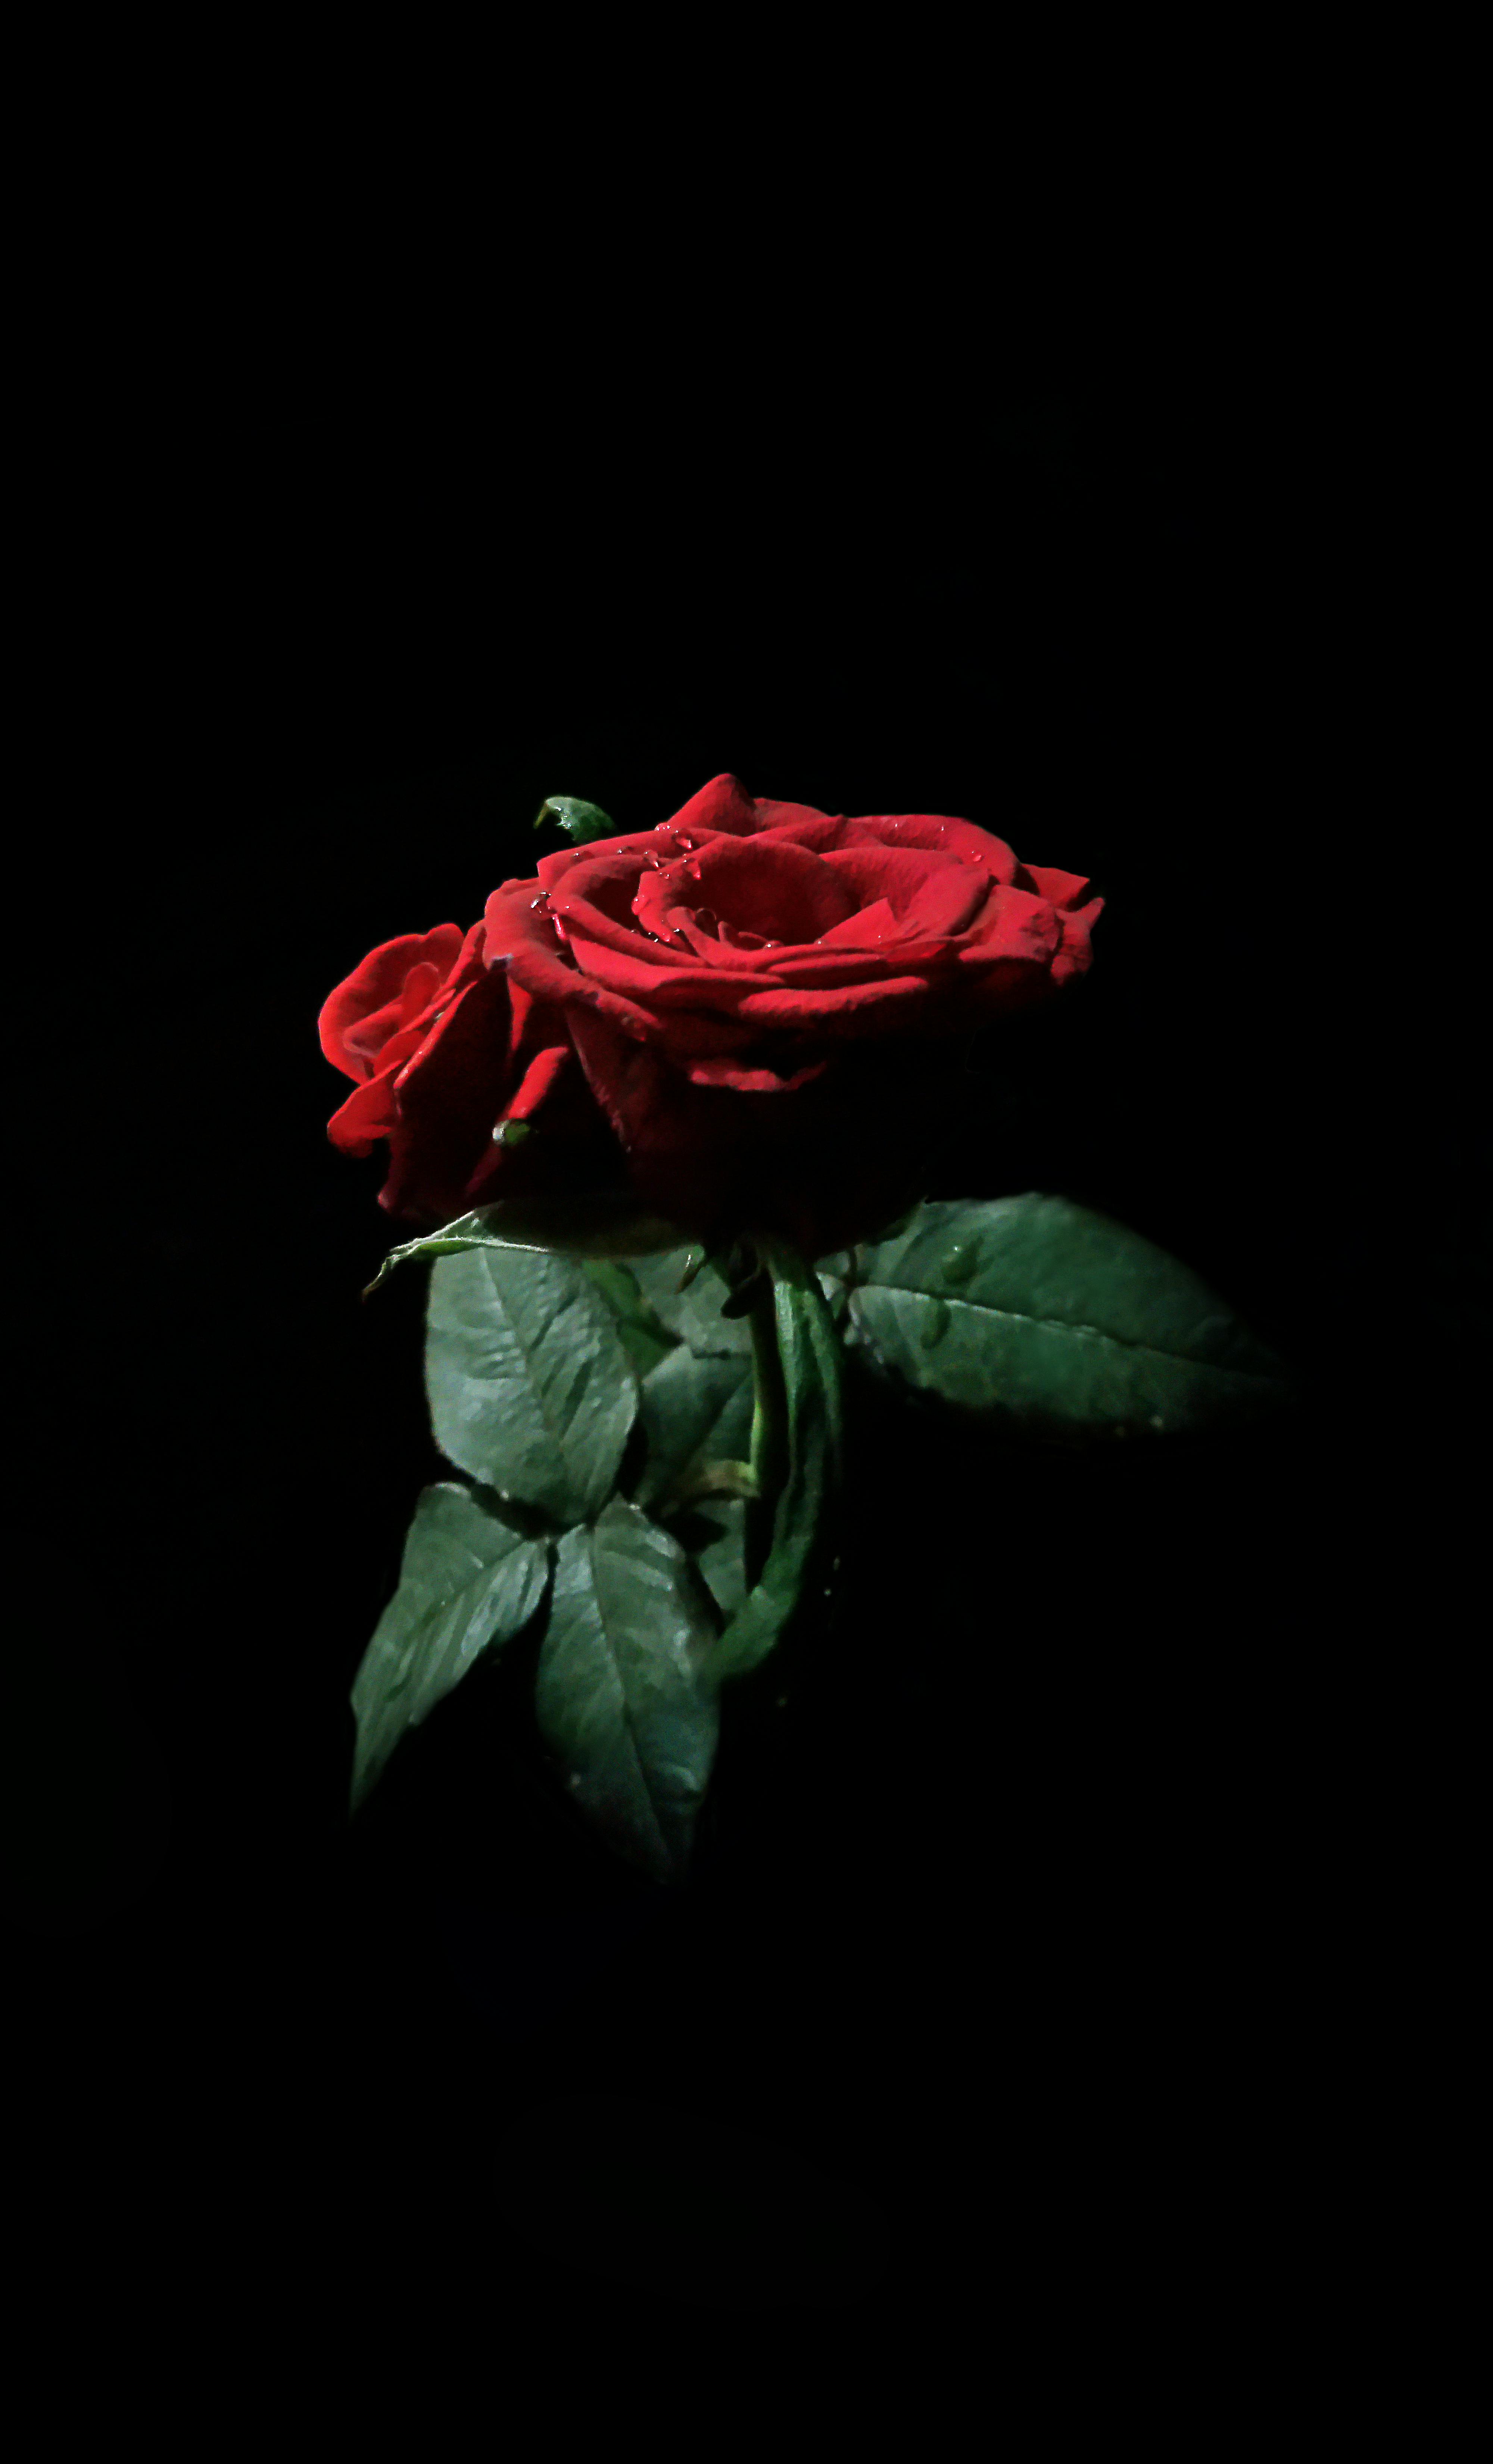  Gambar  Bunga  Mawar  Merah Keren